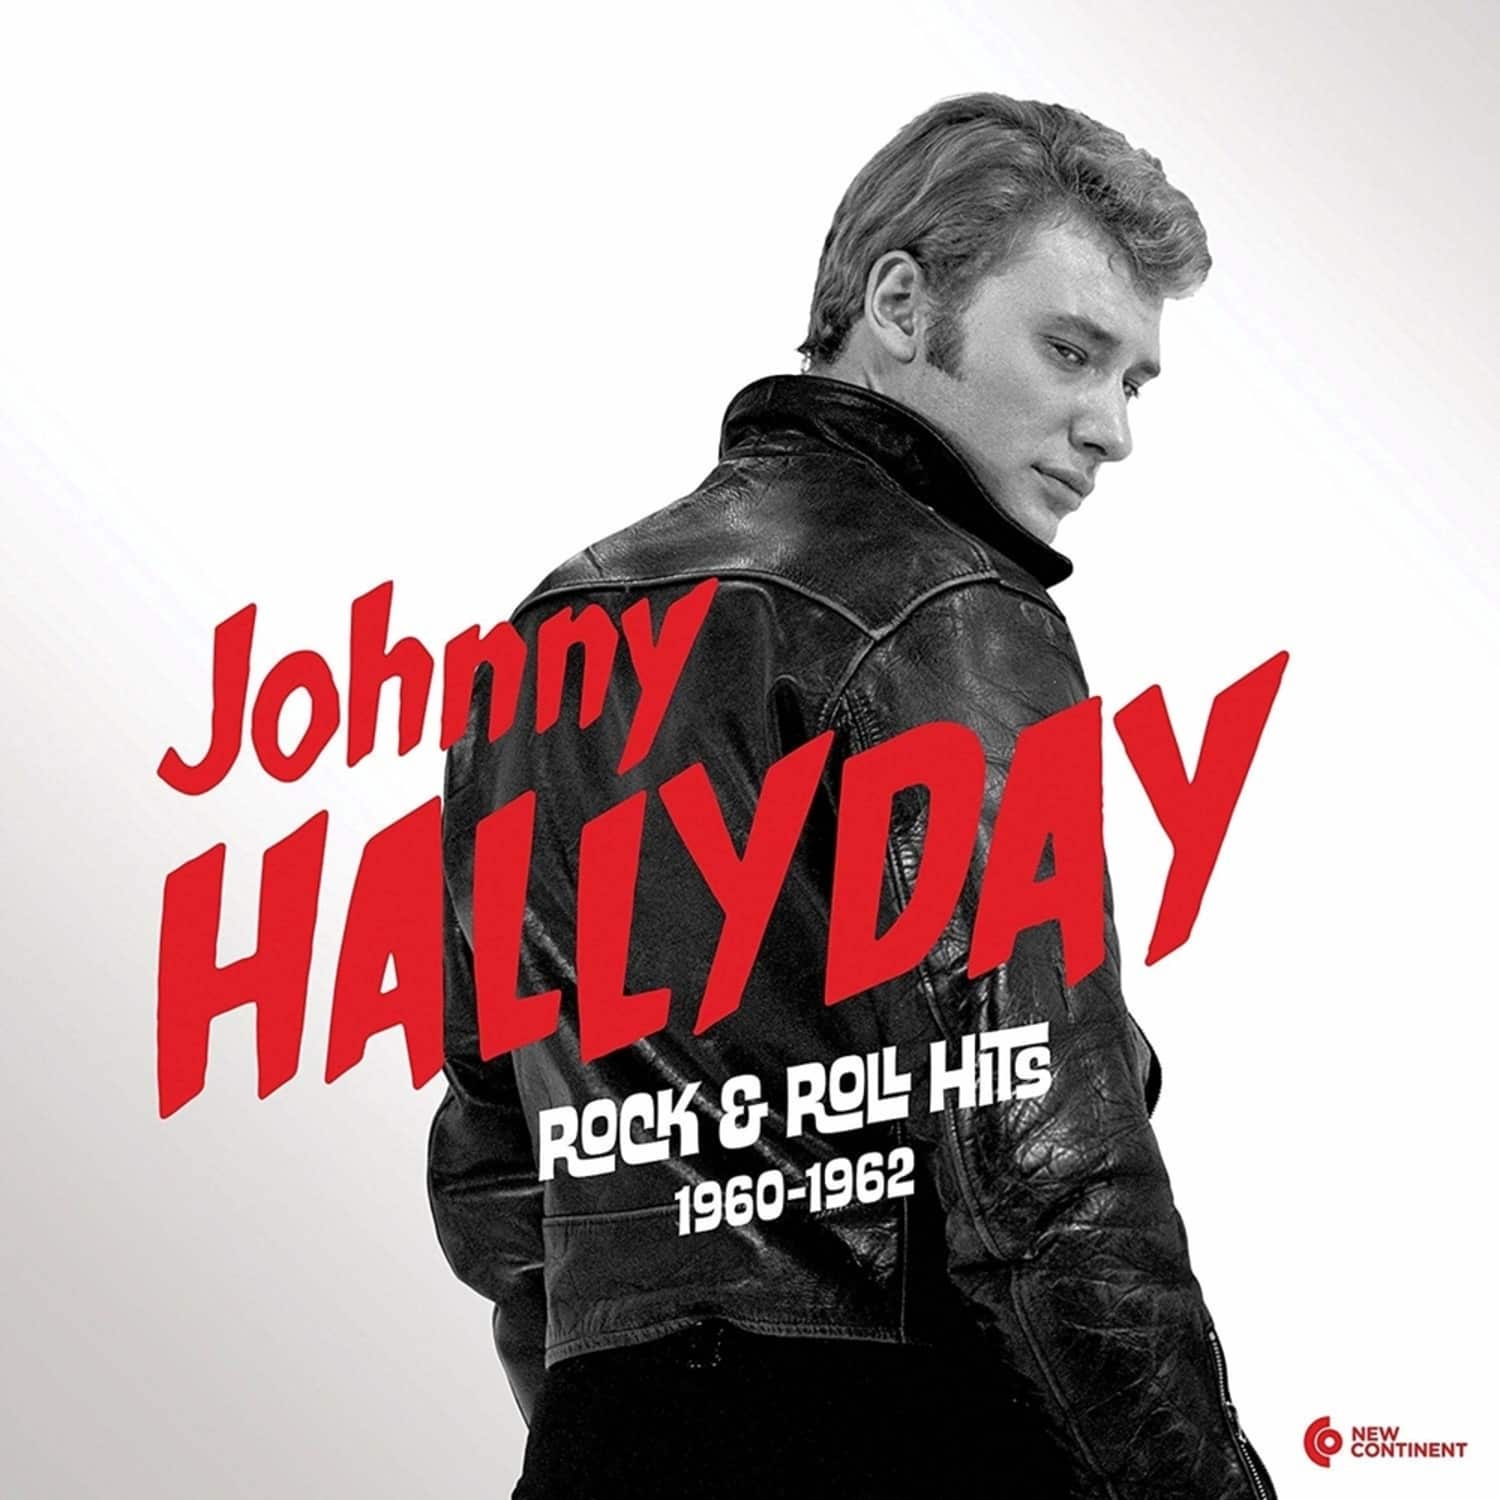 Johnny Hallyday - ROCK & ROLL HITS 1960-1962 